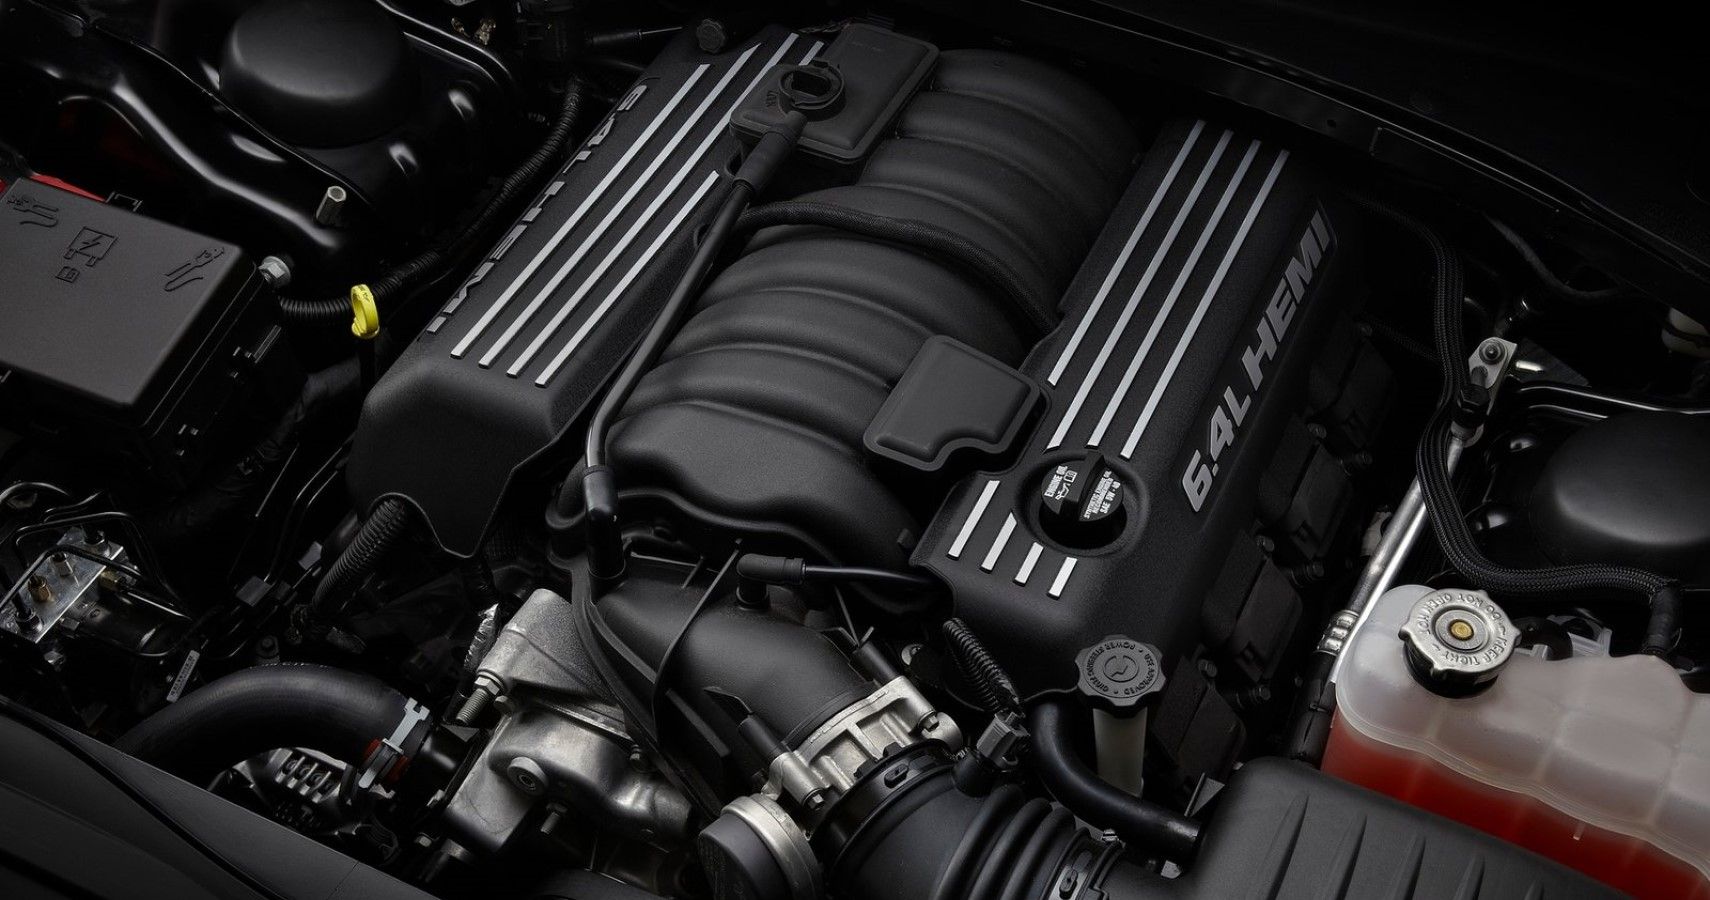 Chrysler 300 SRT8 engine close-up view